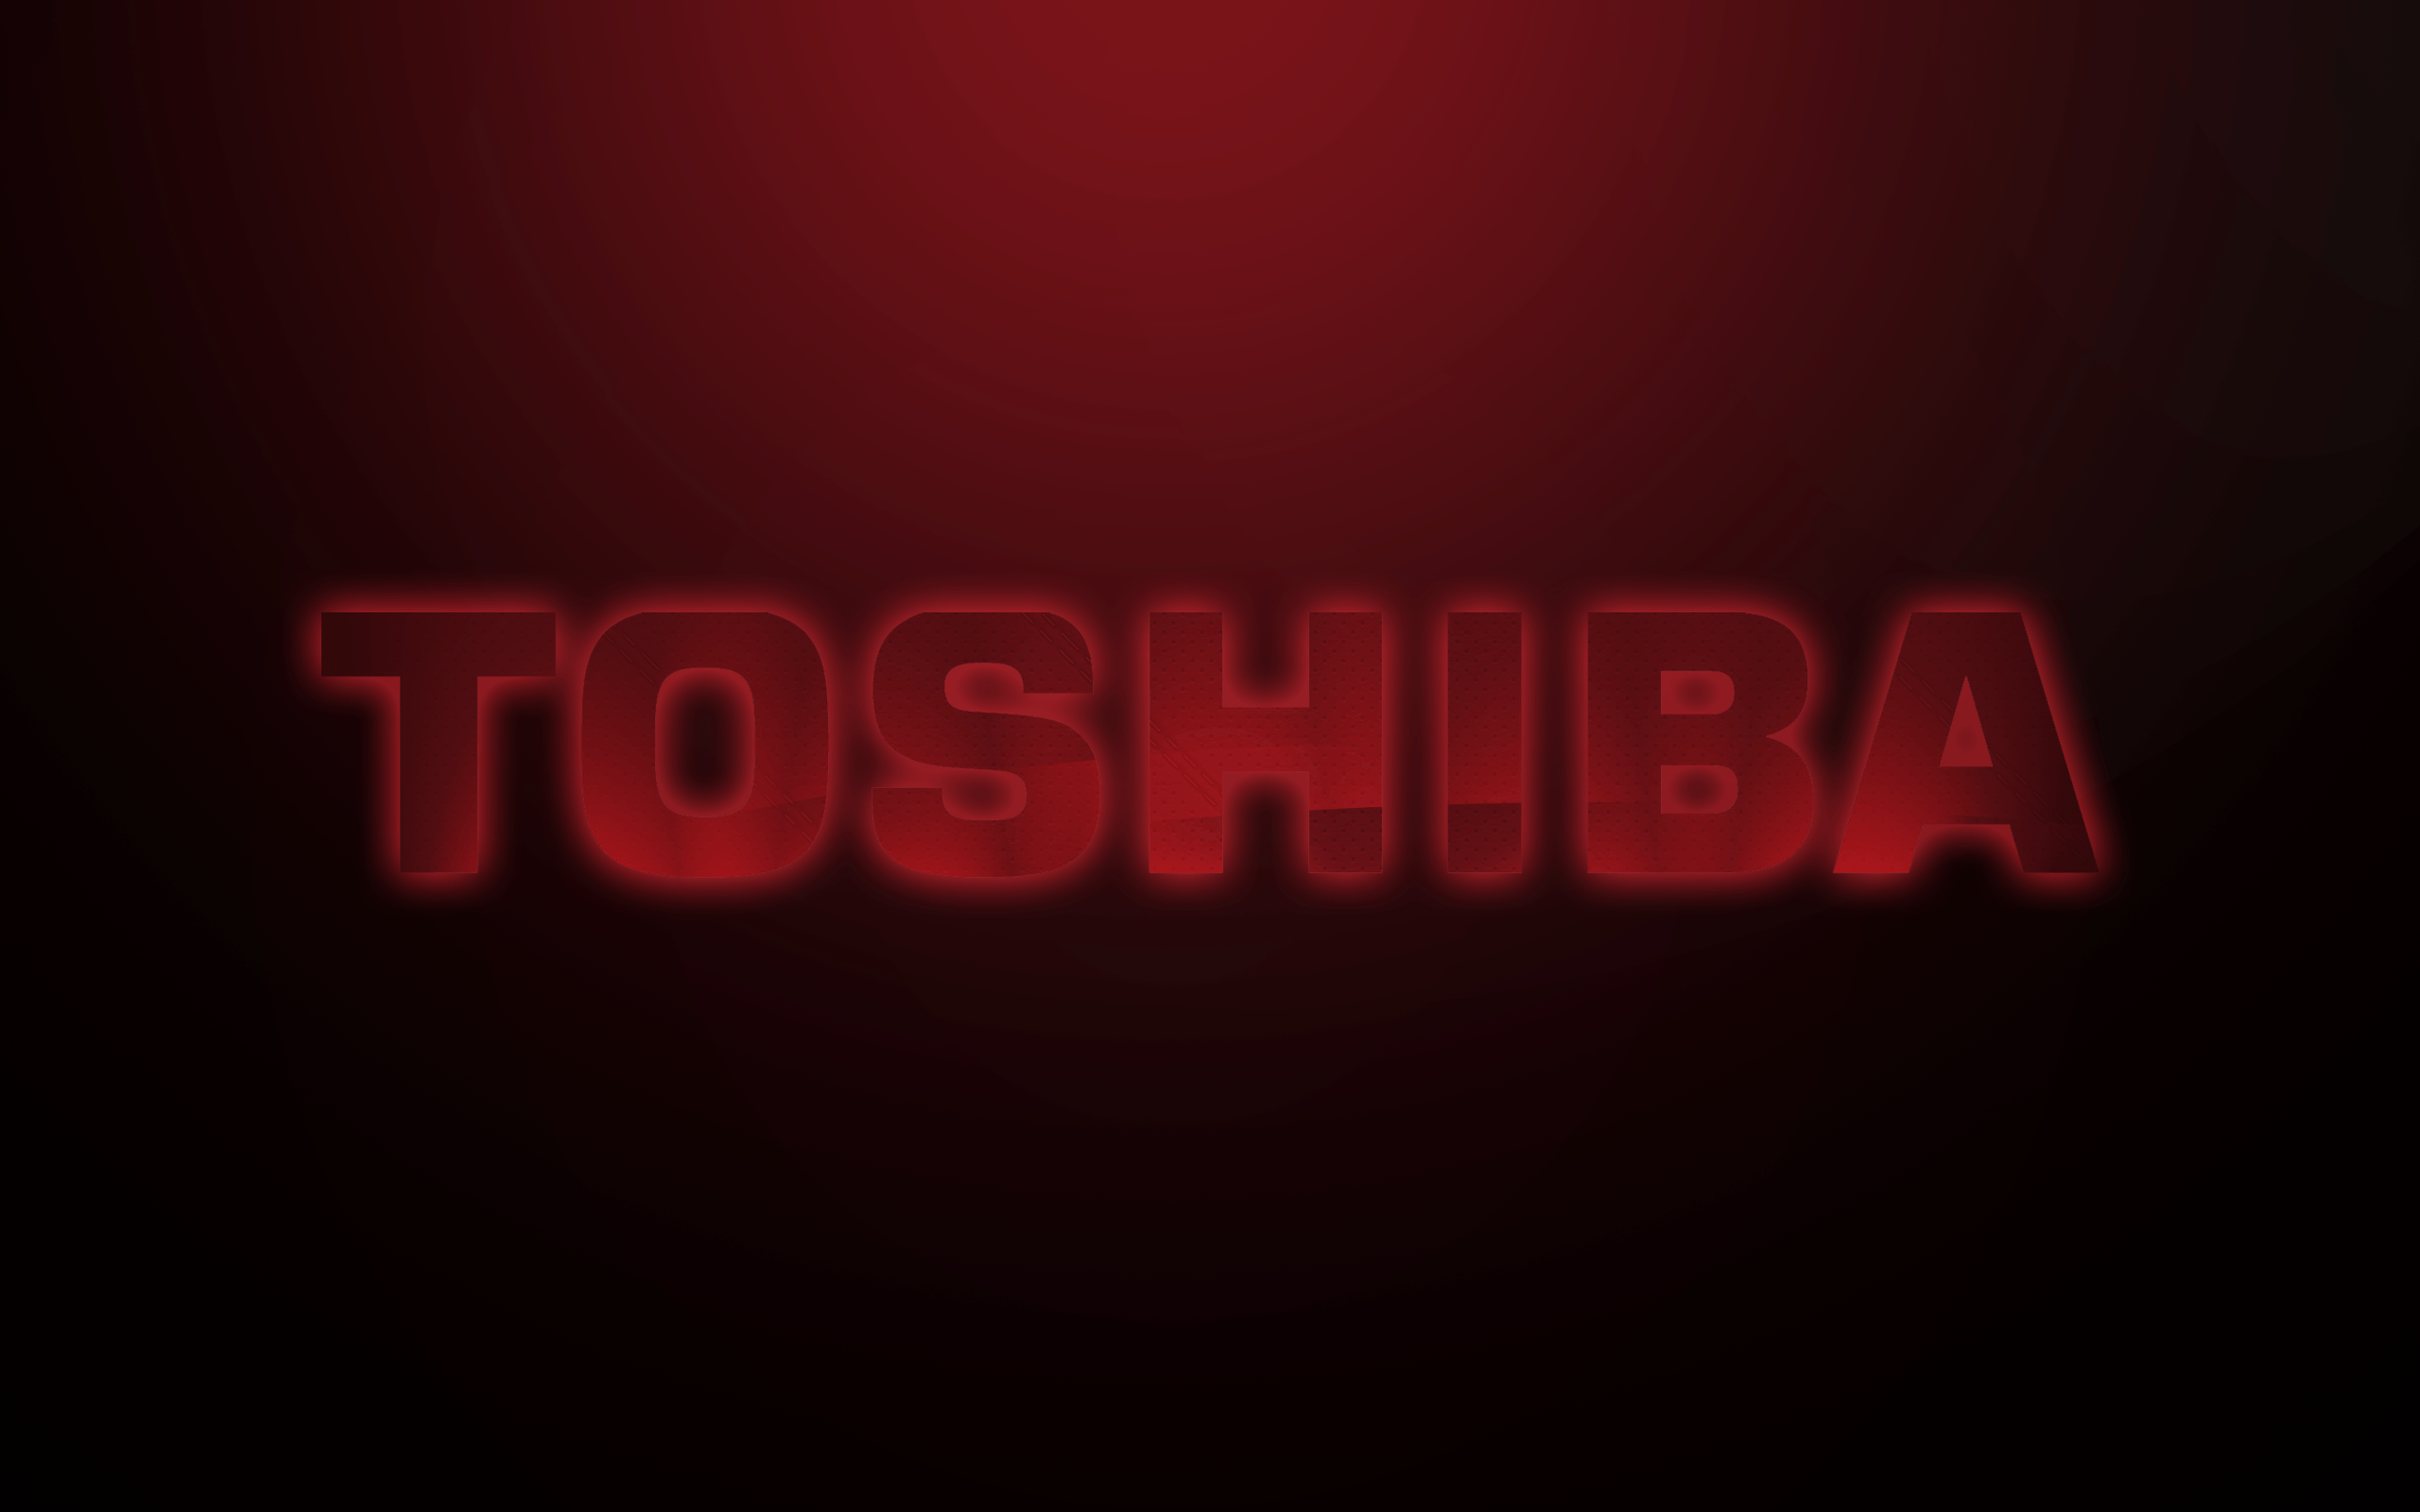 Toshiba Desktop Background